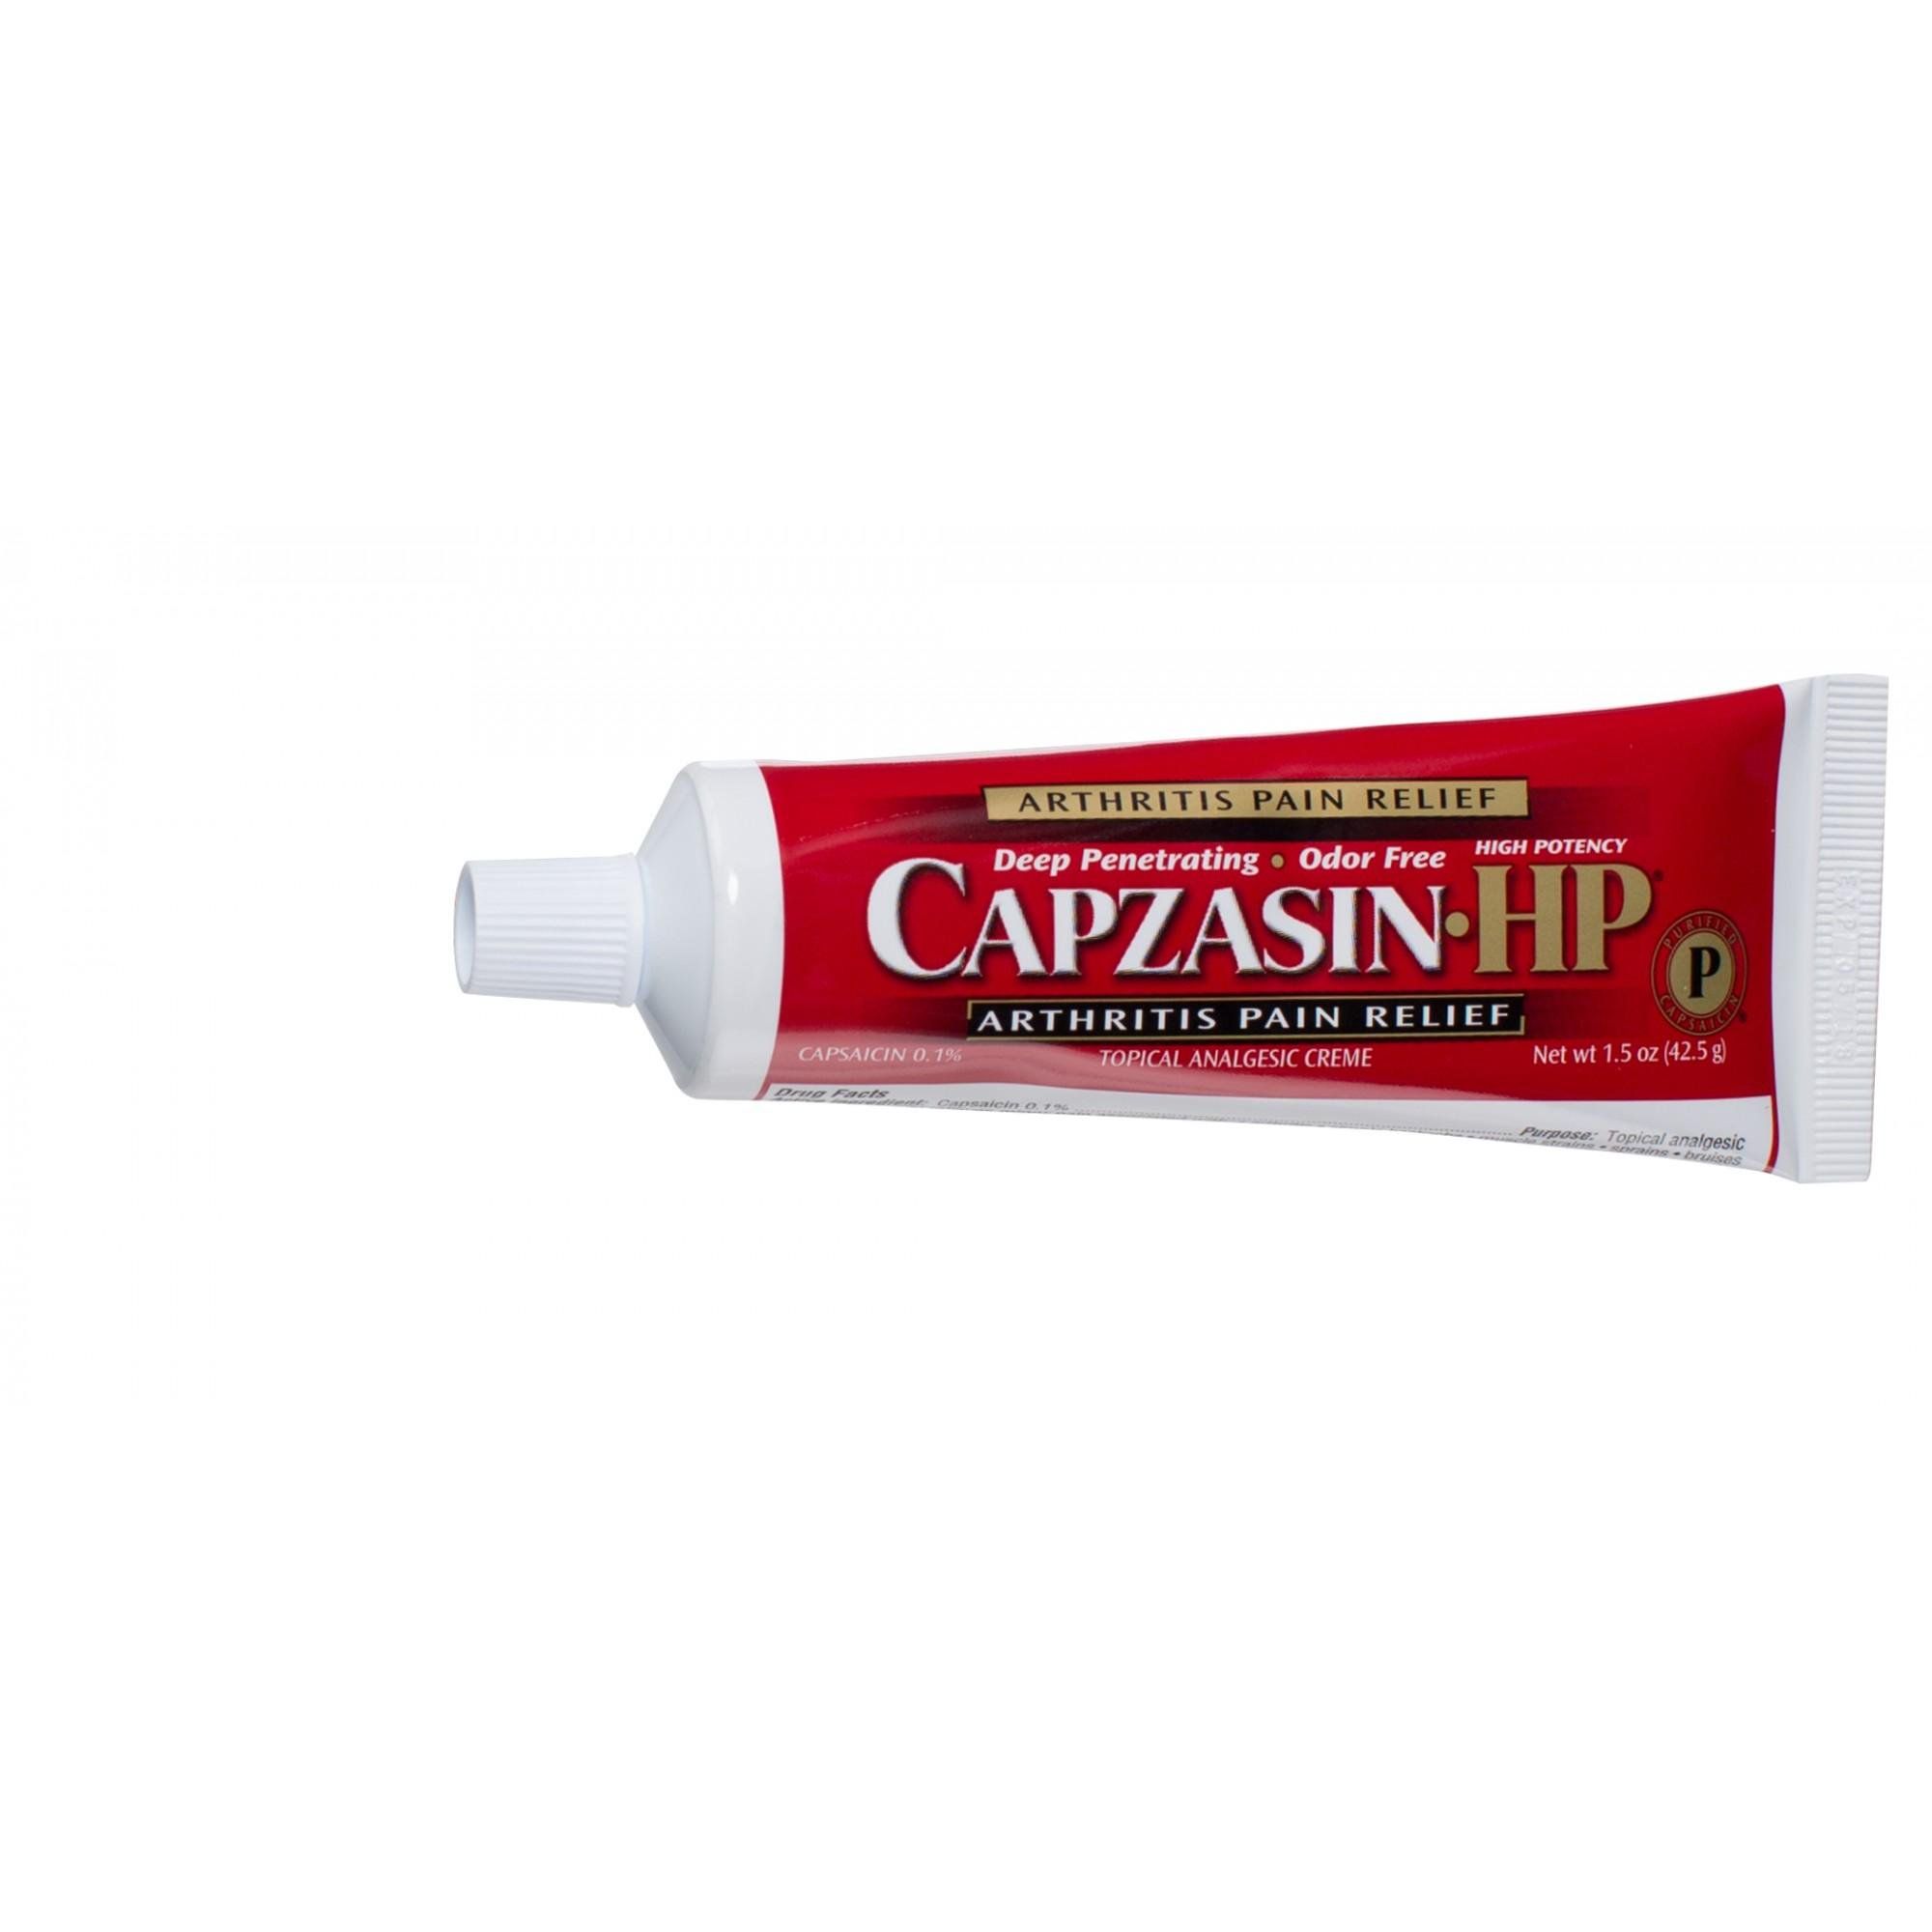 Capzasin-HP Arthritis Pain Relief Creme - 1.5 oz